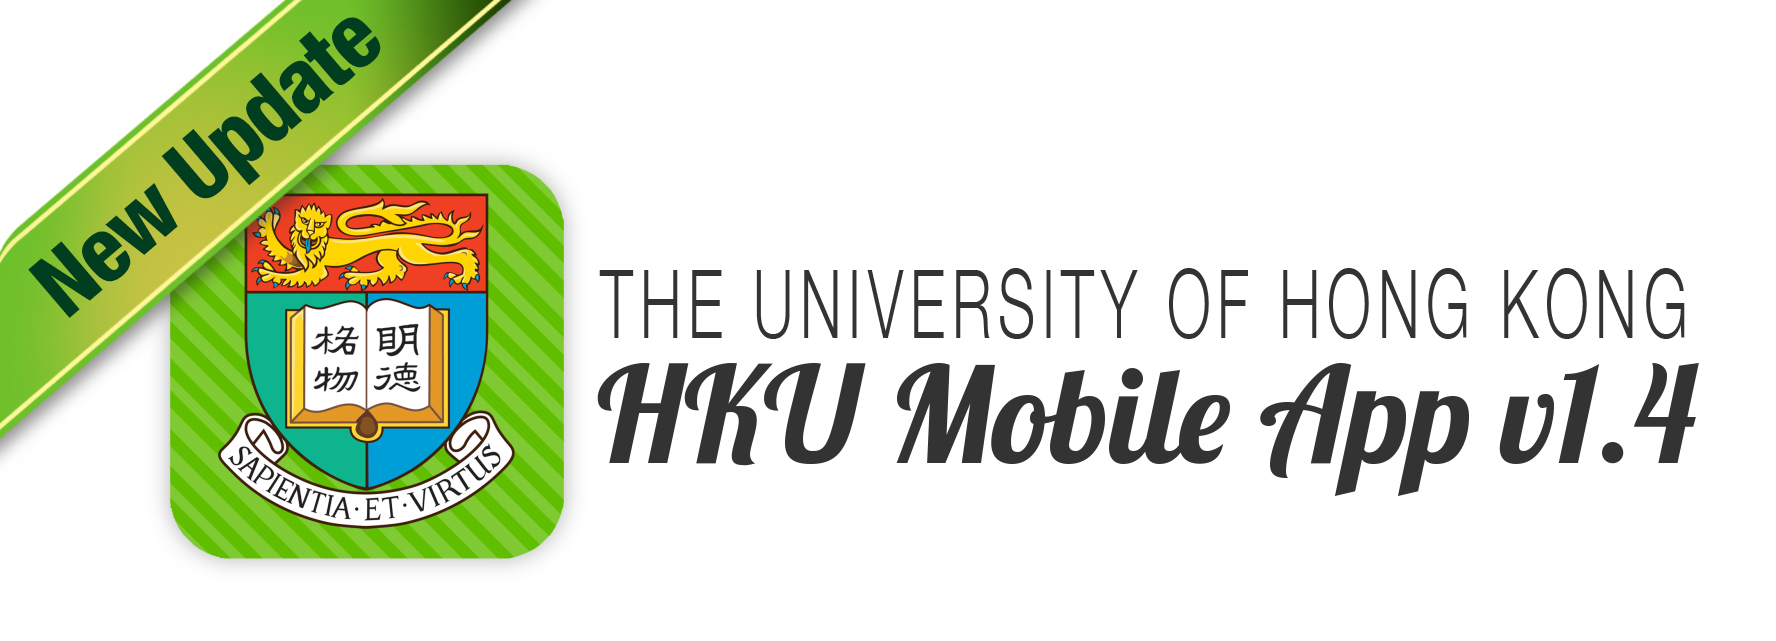 HKU Mobile App v1.4